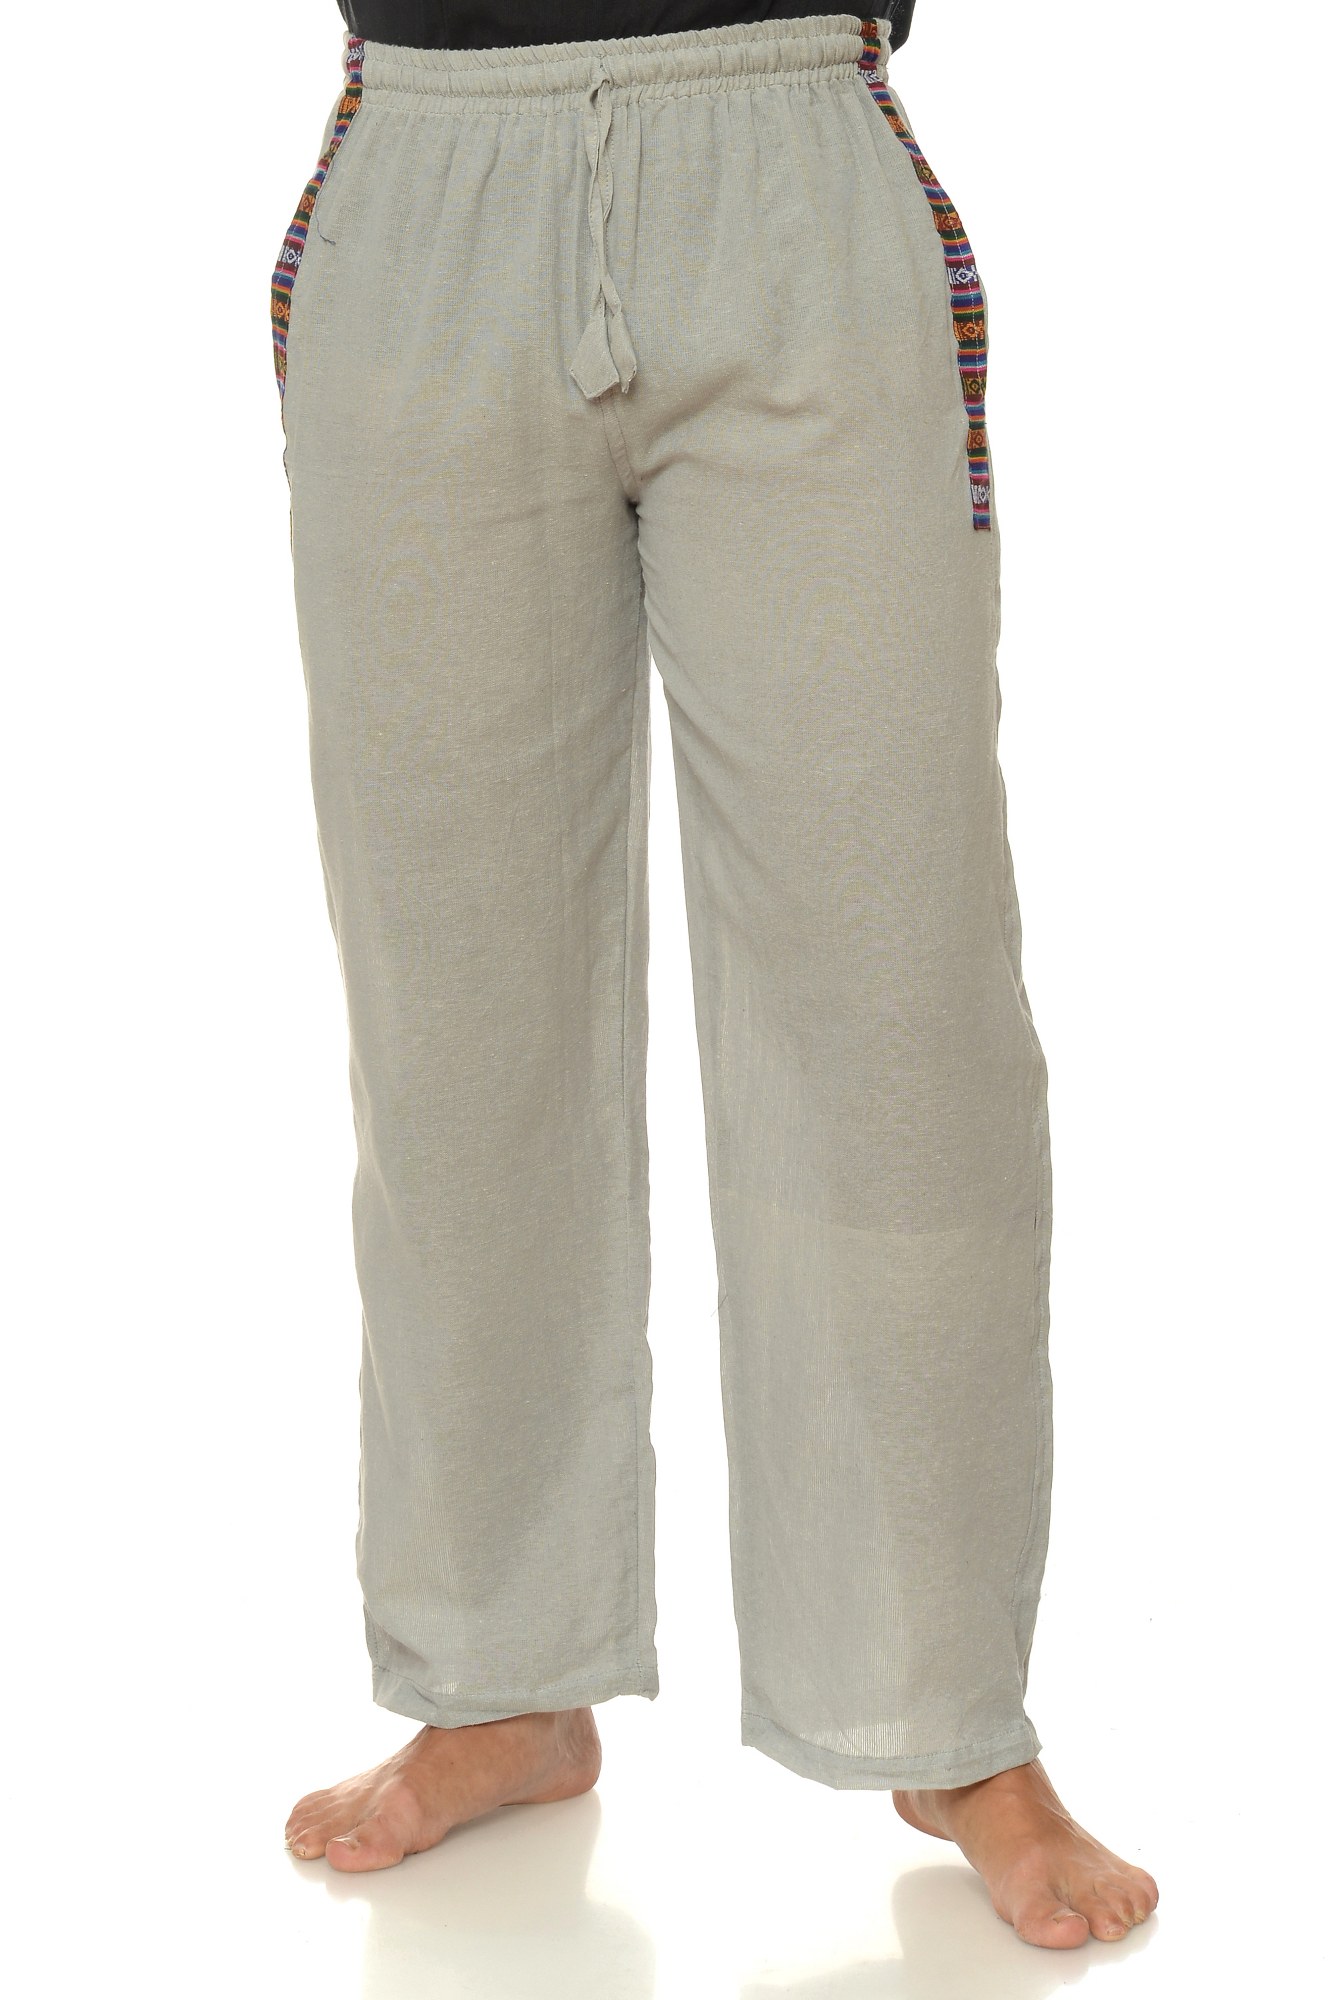 Pantaloni lungi de bumbac cu insertie etnica - gri